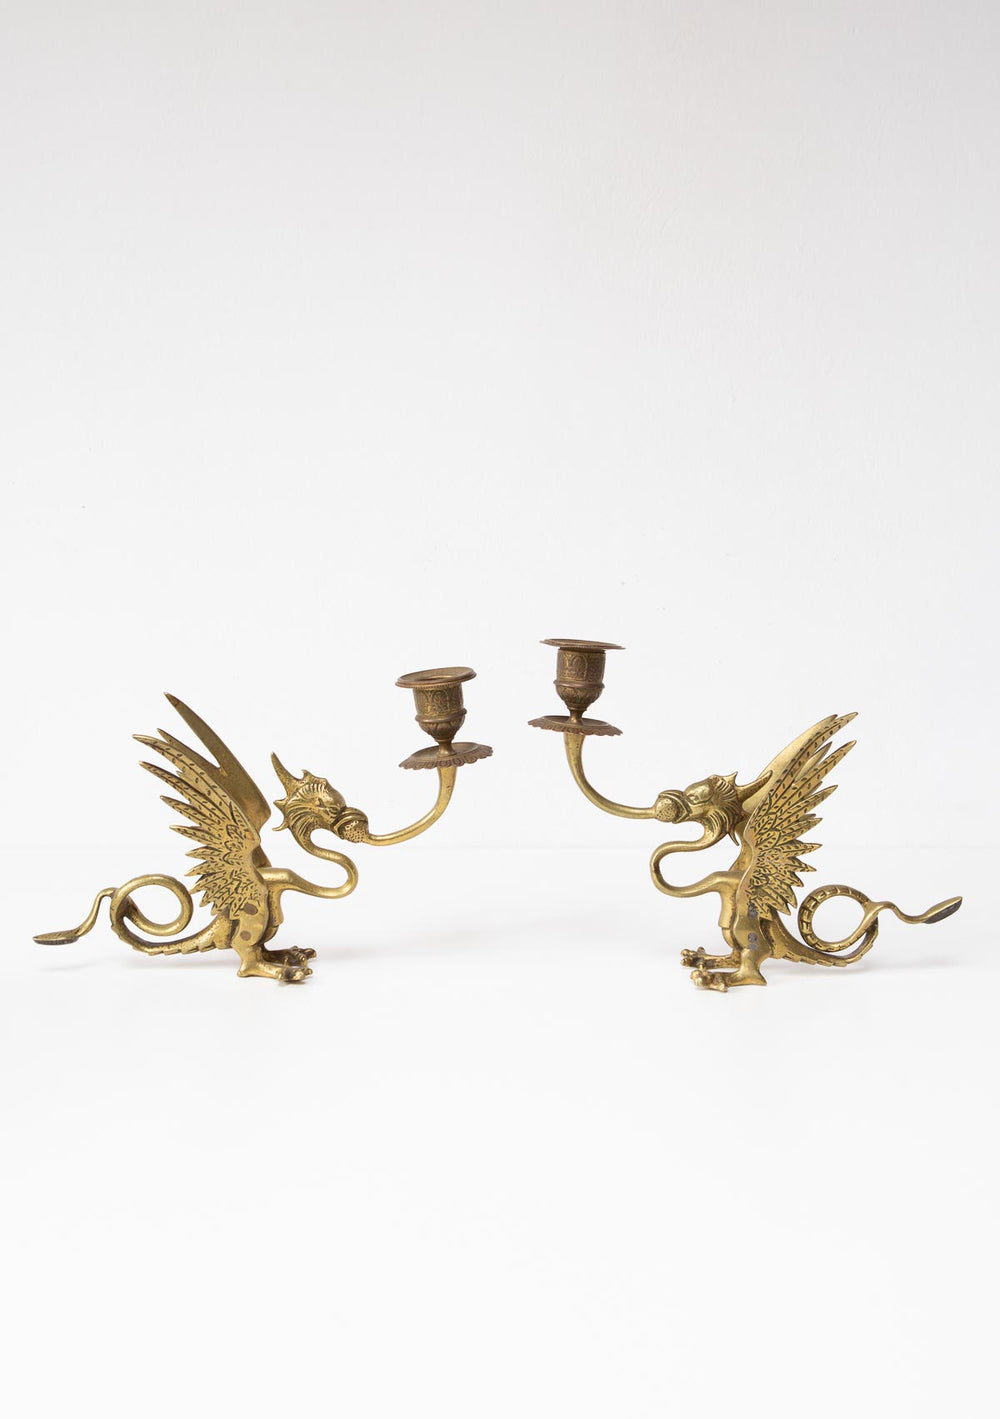 Antiguos candeleros quimeras o dragones. Francia aprox. 1900 antique French dragon candlesticks